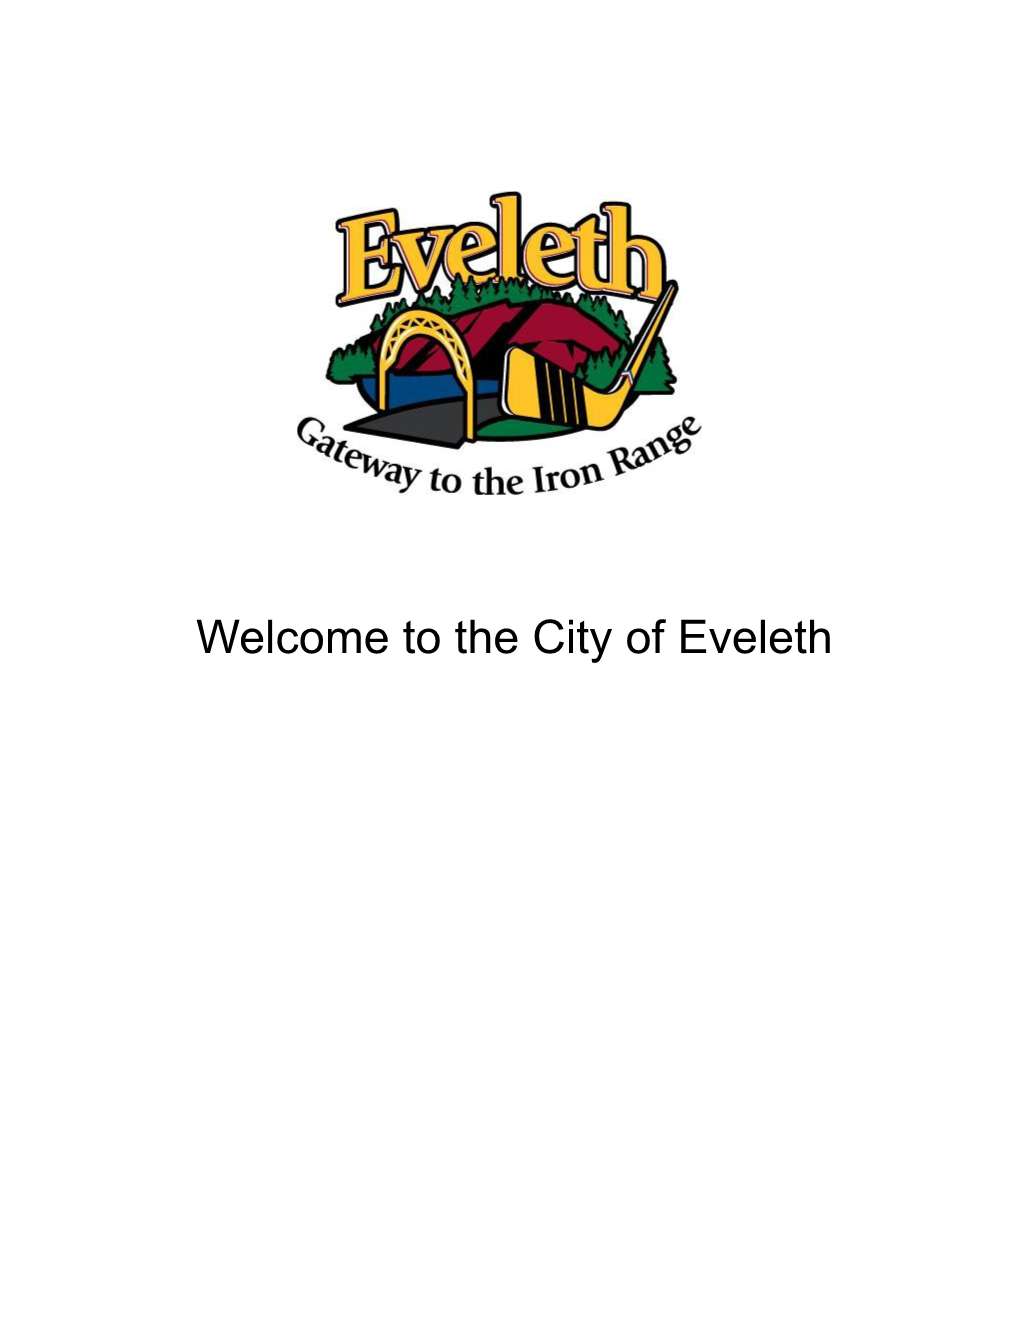 The City of Eveleth